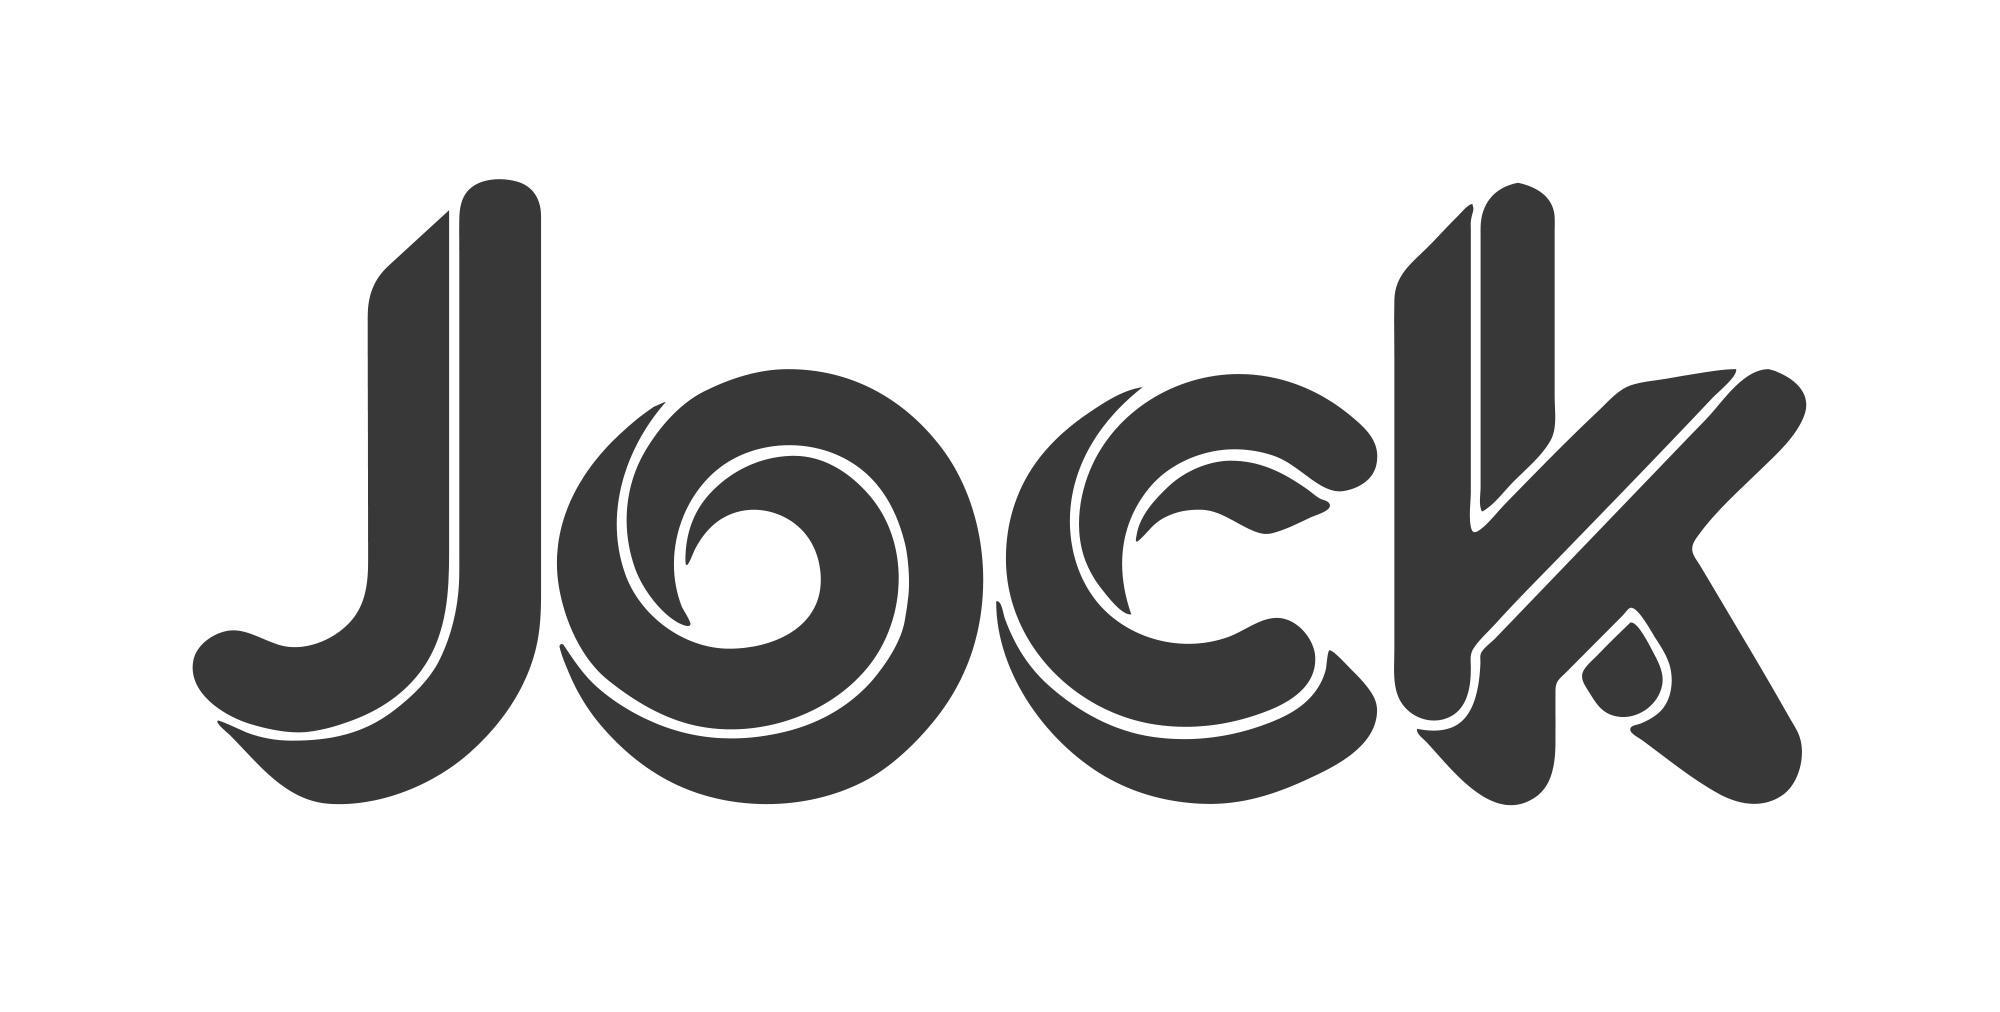 jock logo